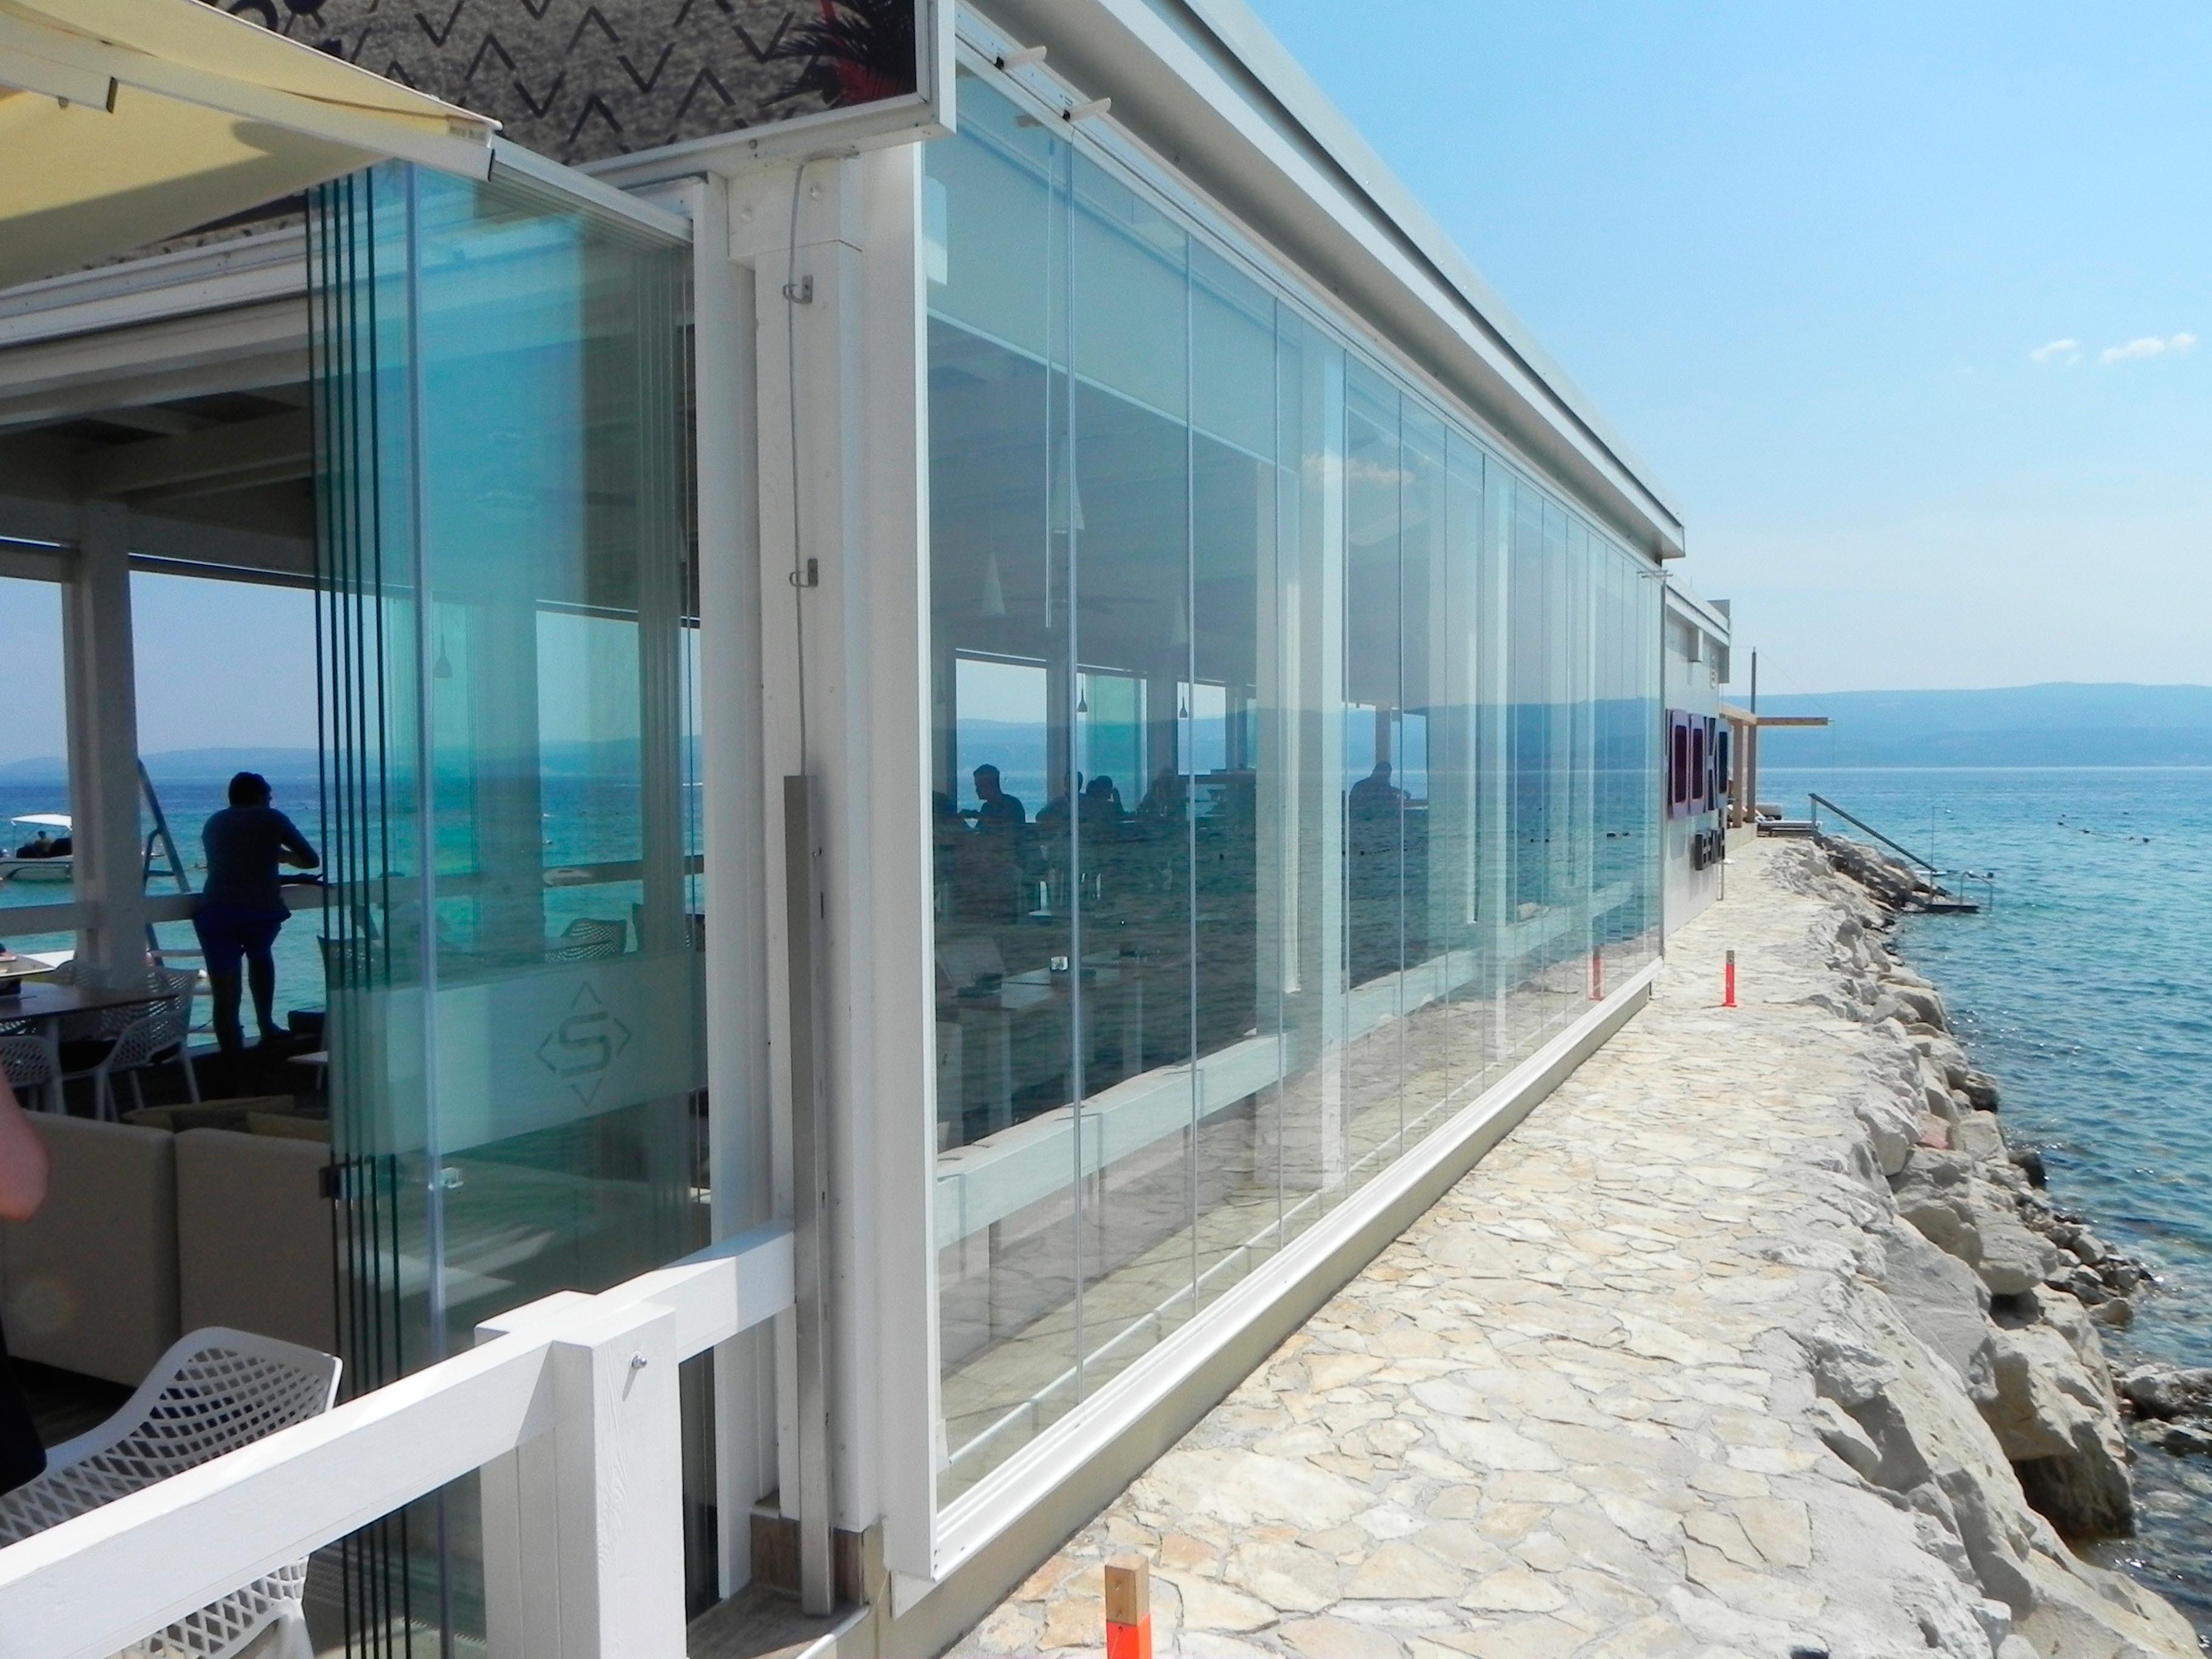 Glass enclosure in an restaurant in Croatia